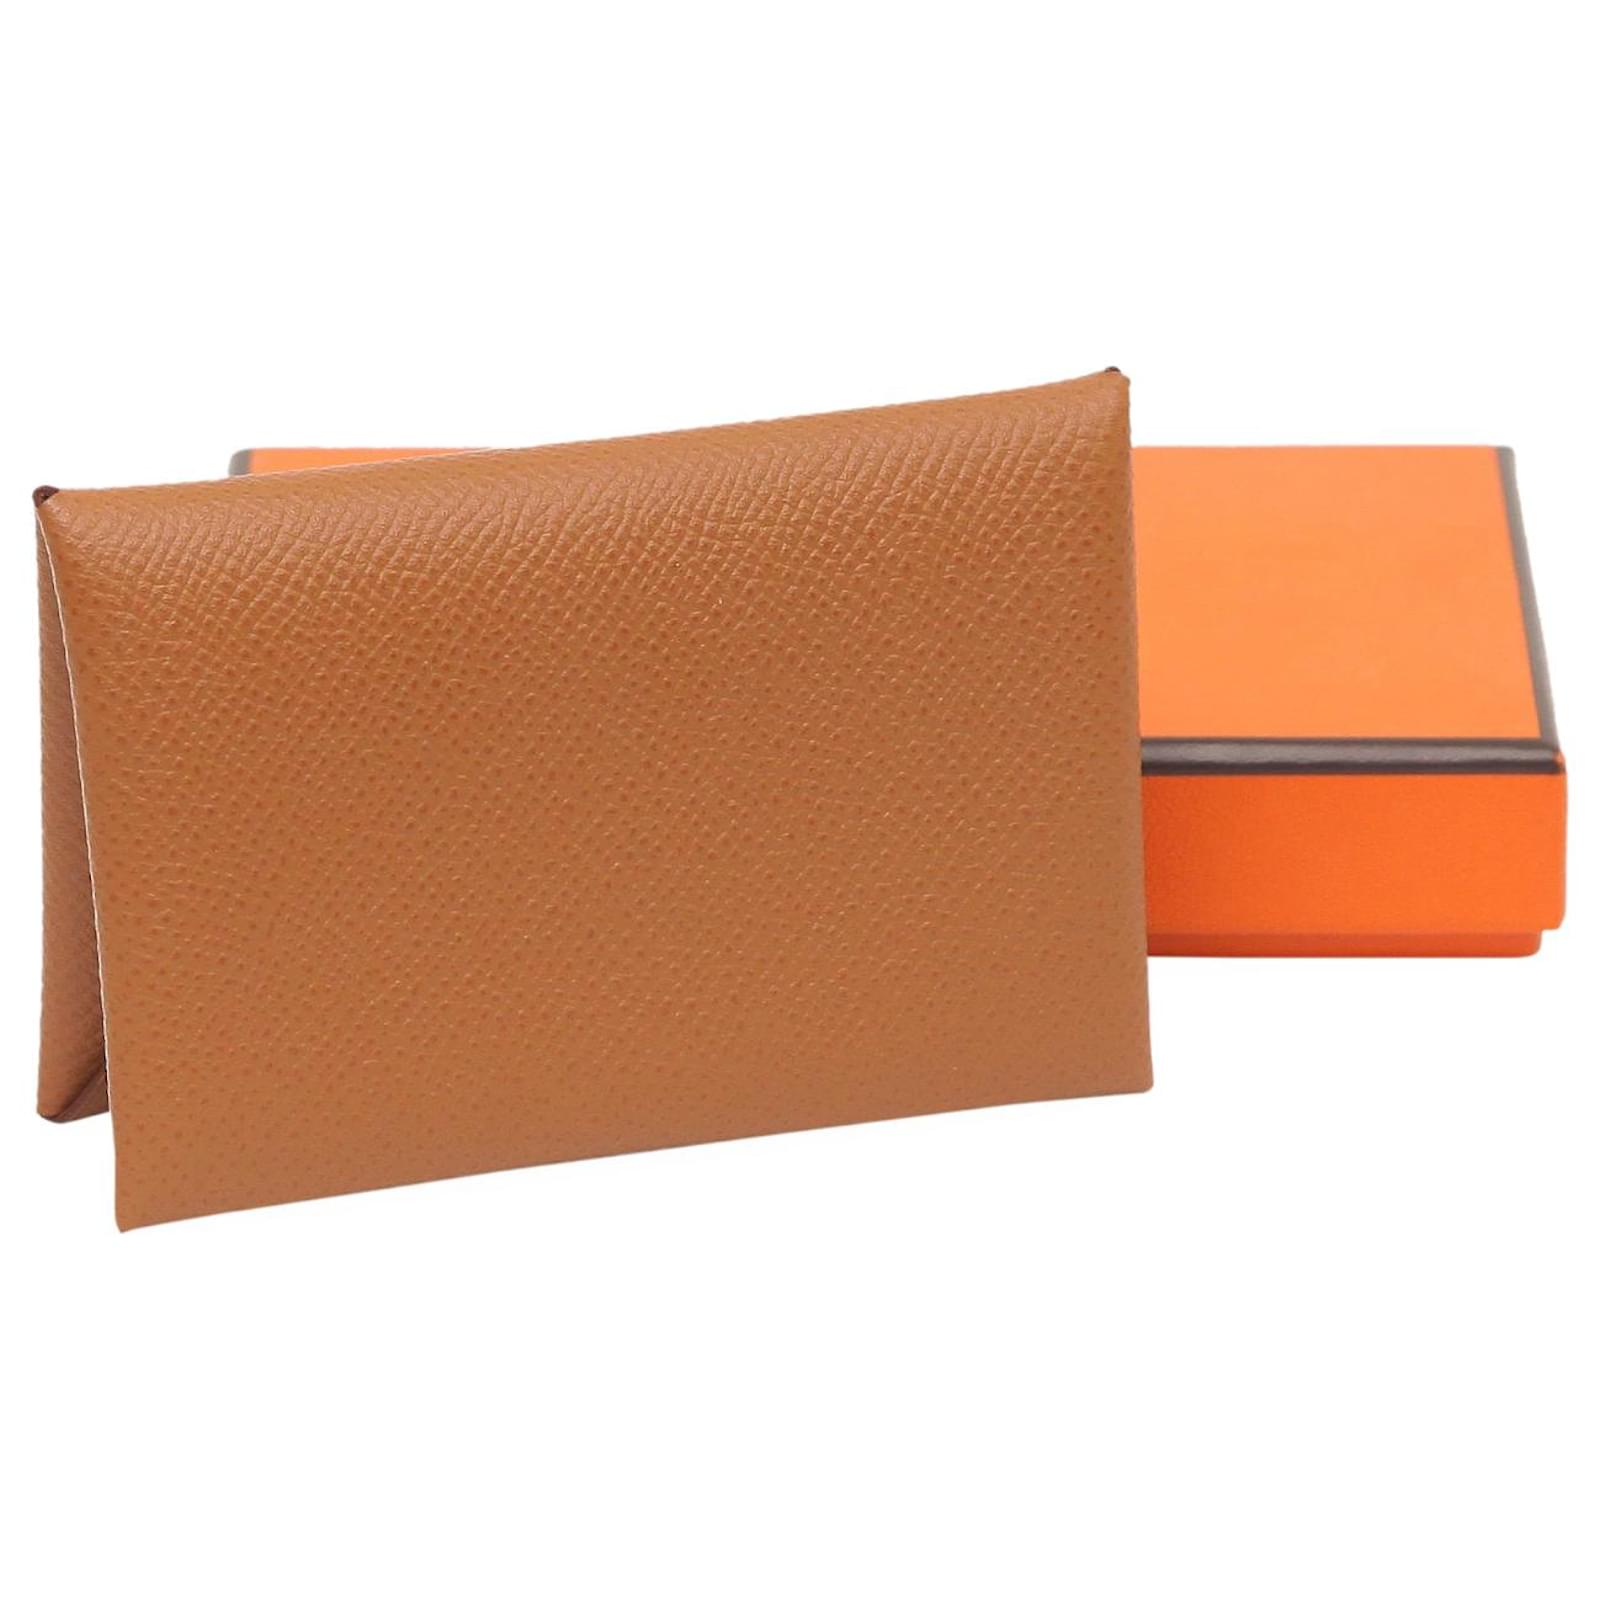 Calvi leather card wallet